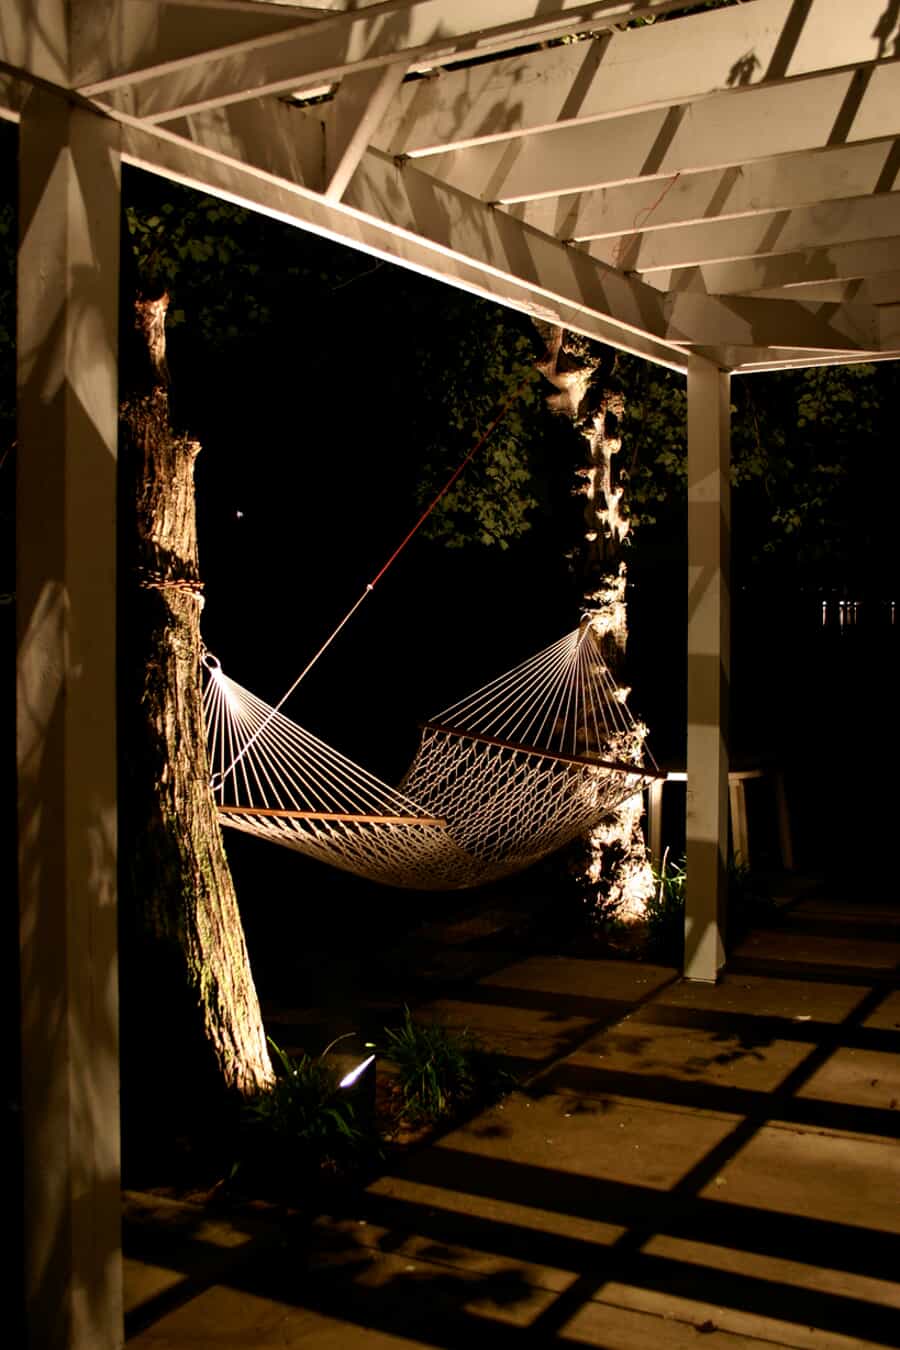 a backyard hammock next to trees that have halogen lights illuminating them